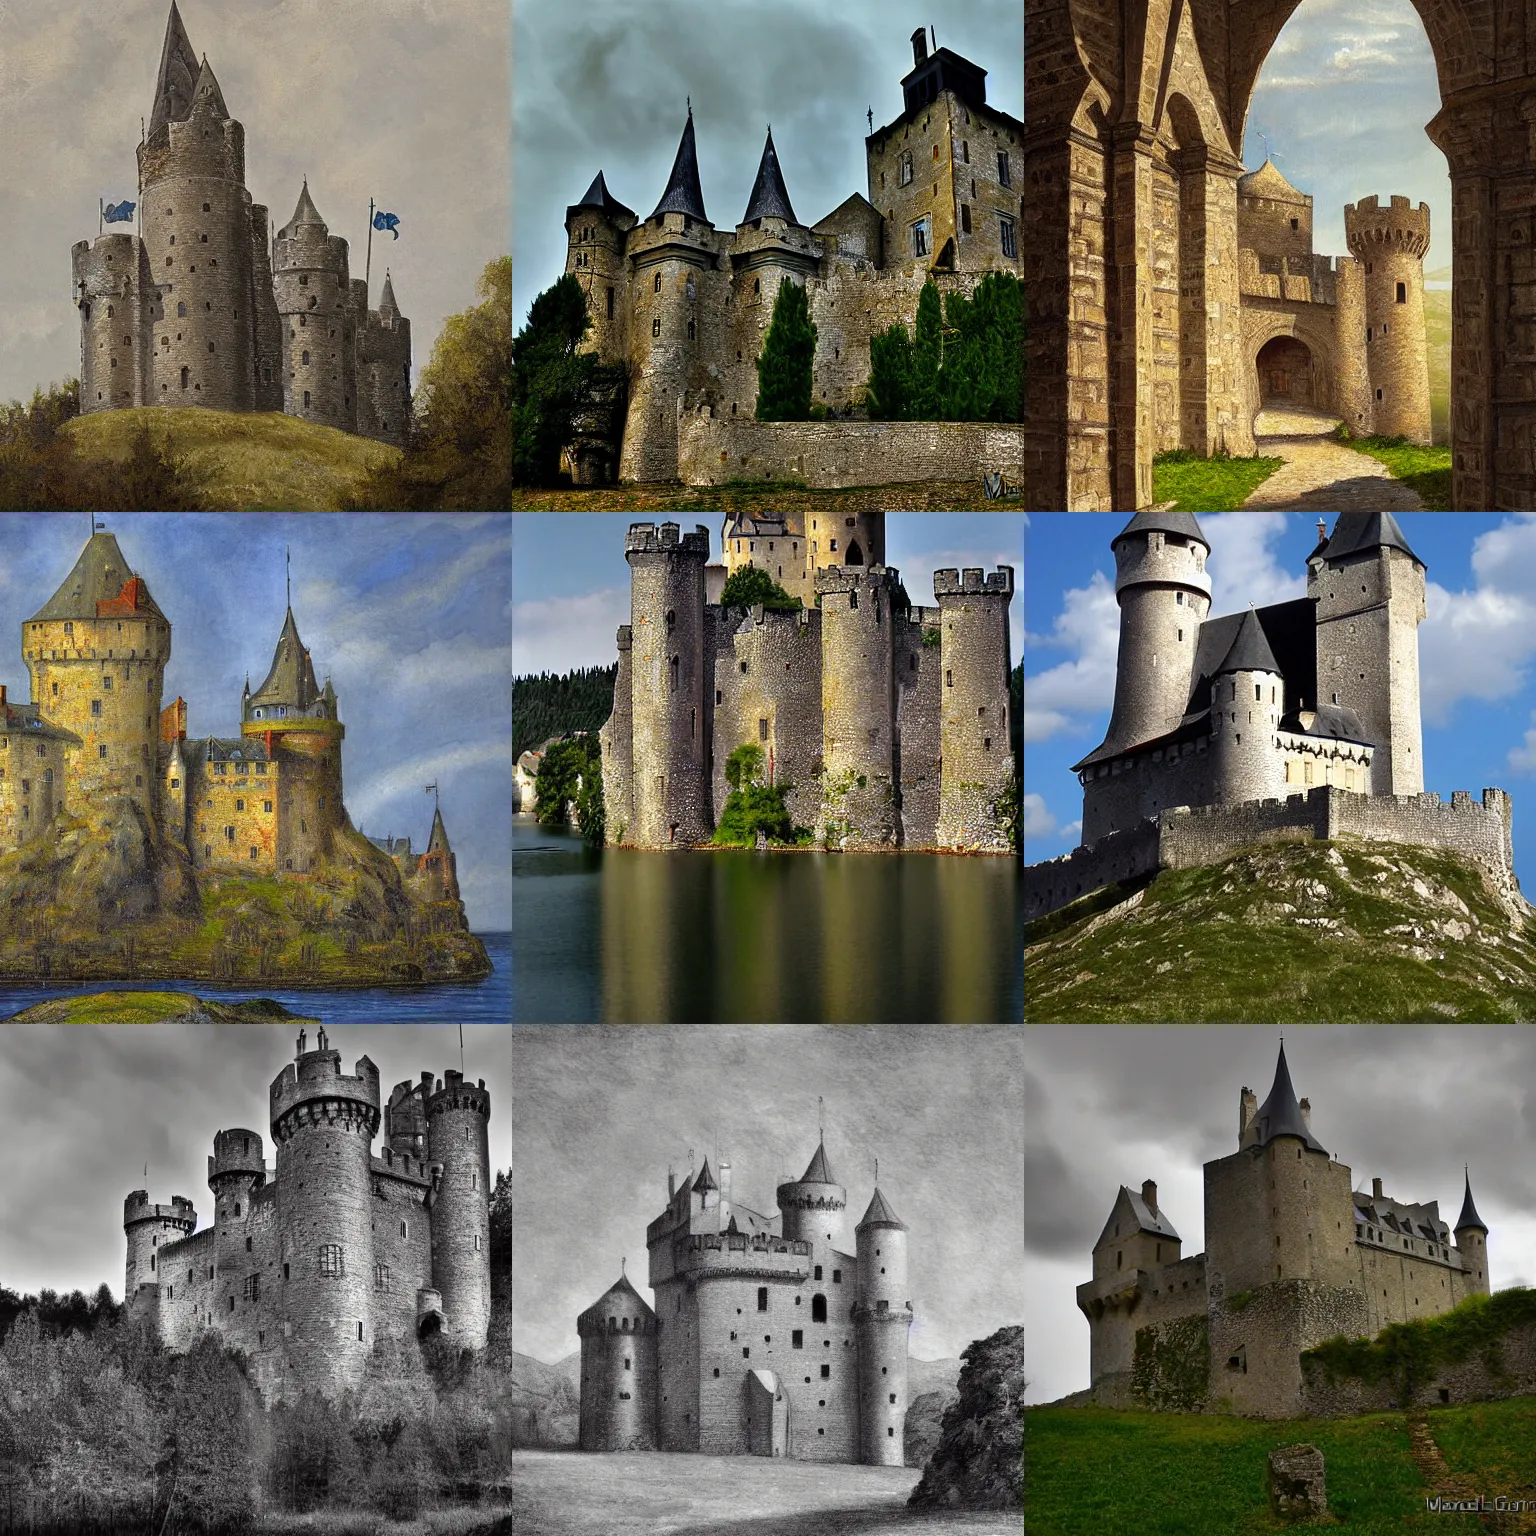 Prompt: medieval castle, by marcel caron